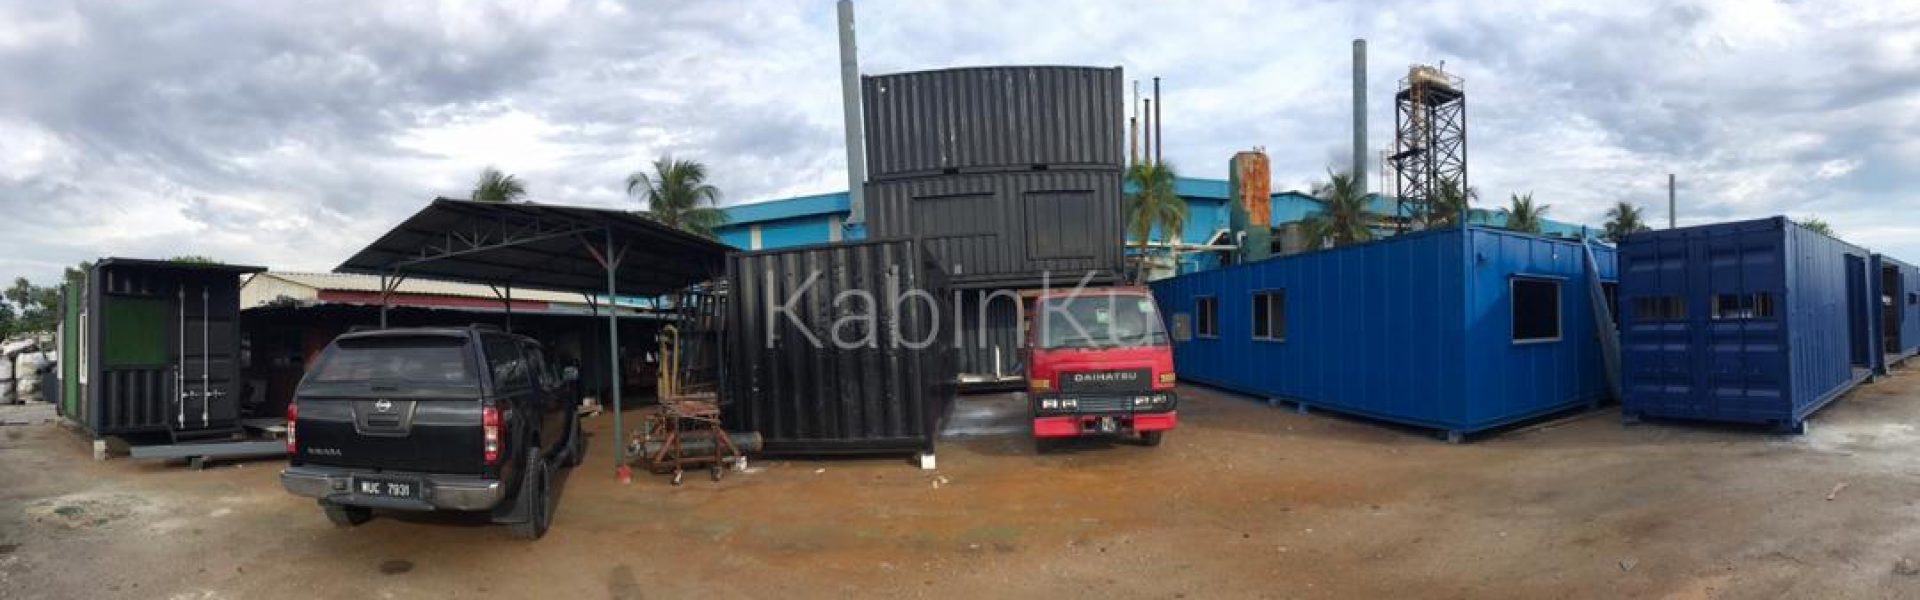 KabinKu Cabin & Container